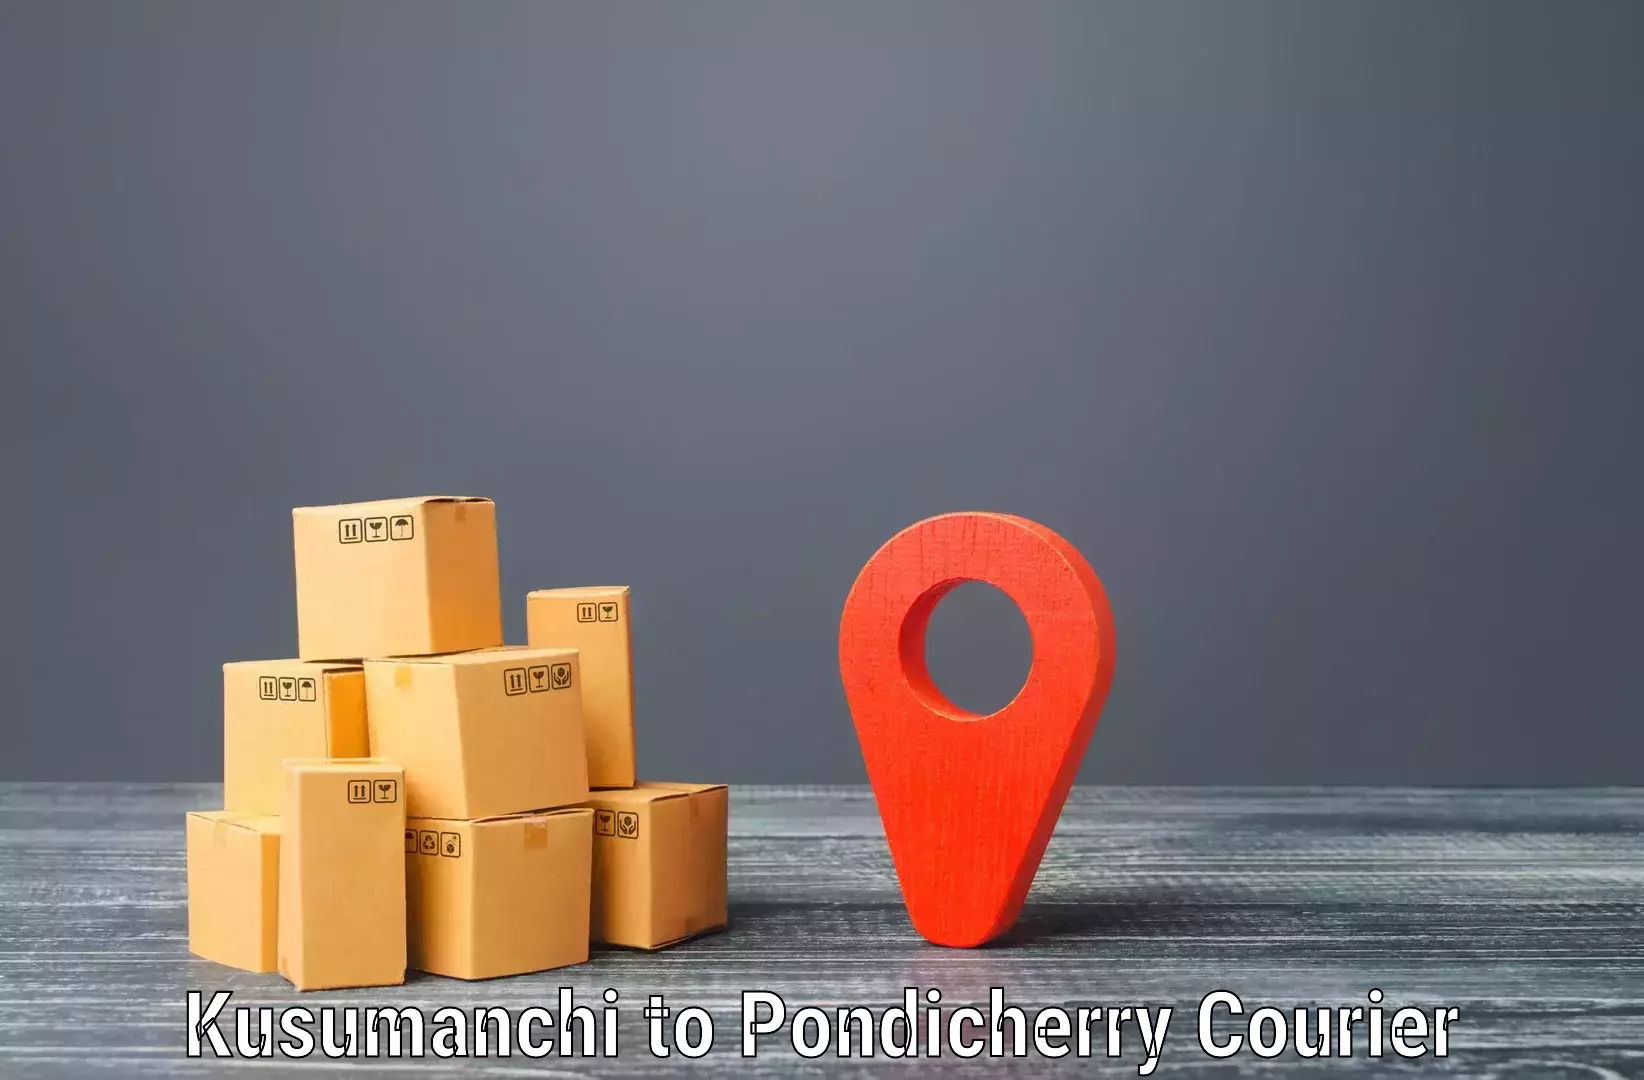 High-speed parcel service Kusumanchi to Pondicherry University